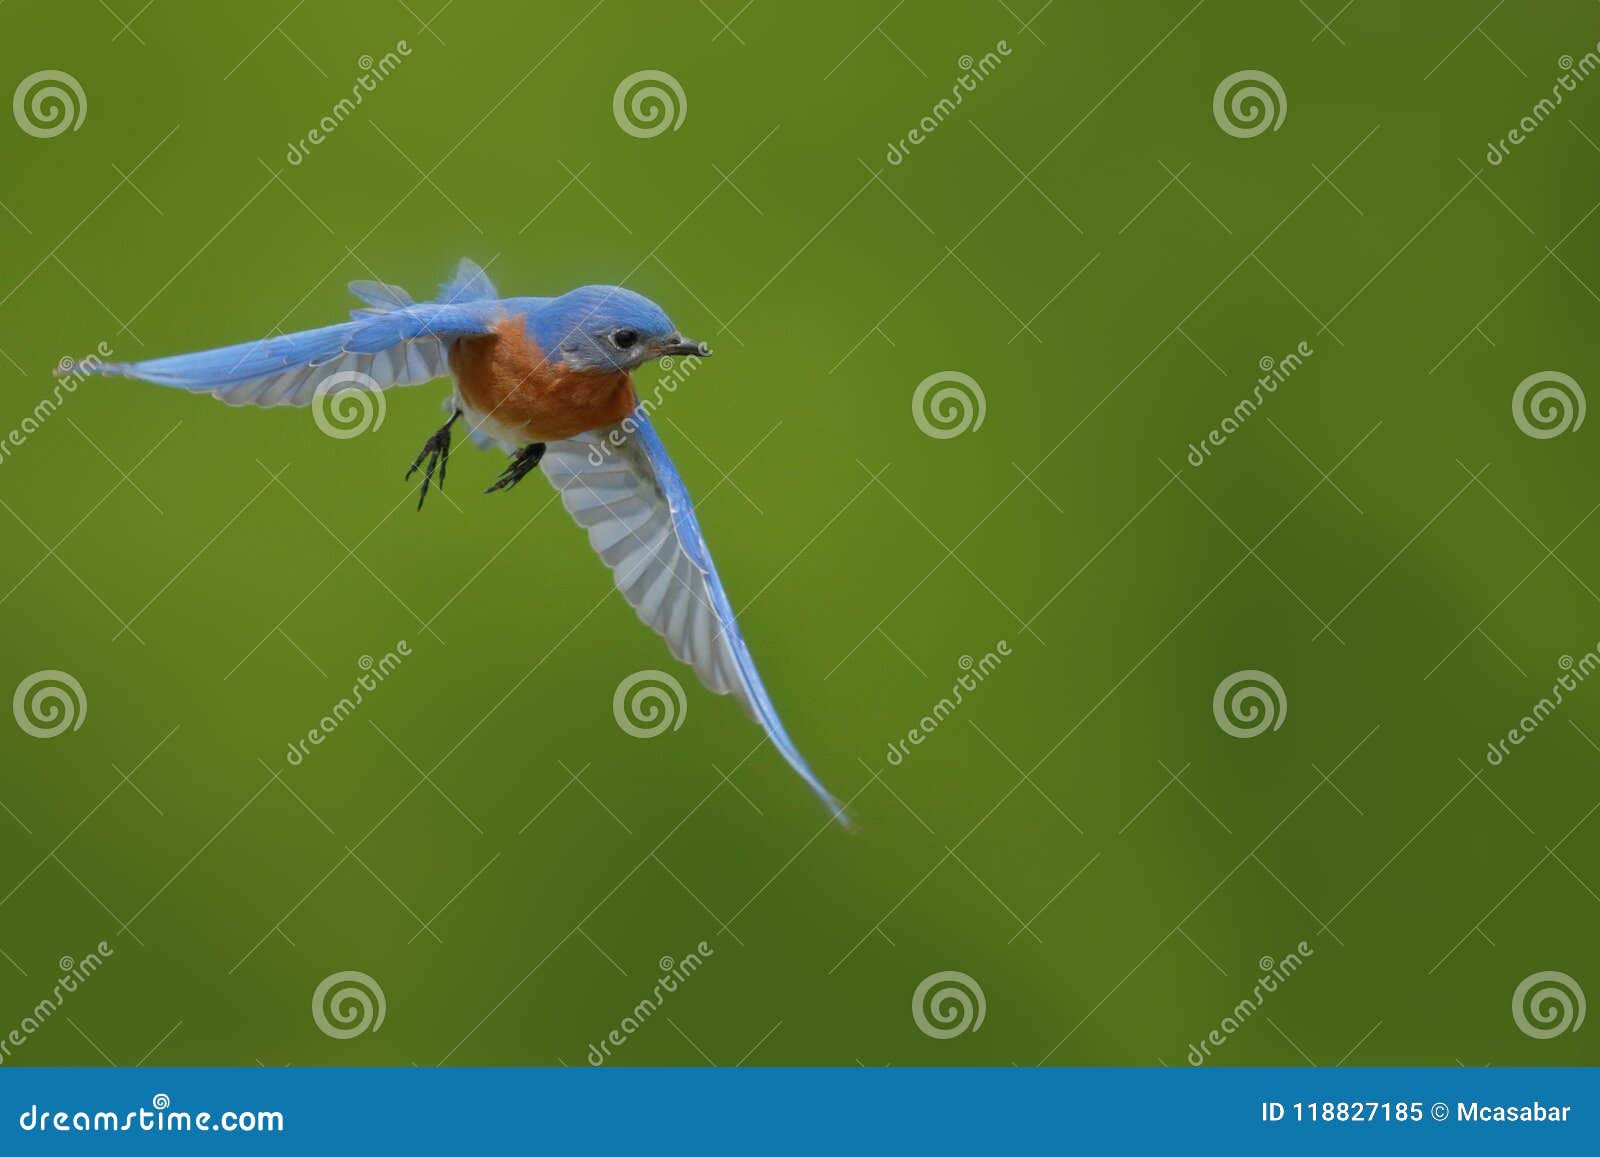 male eastern bluebird flies to nesting box